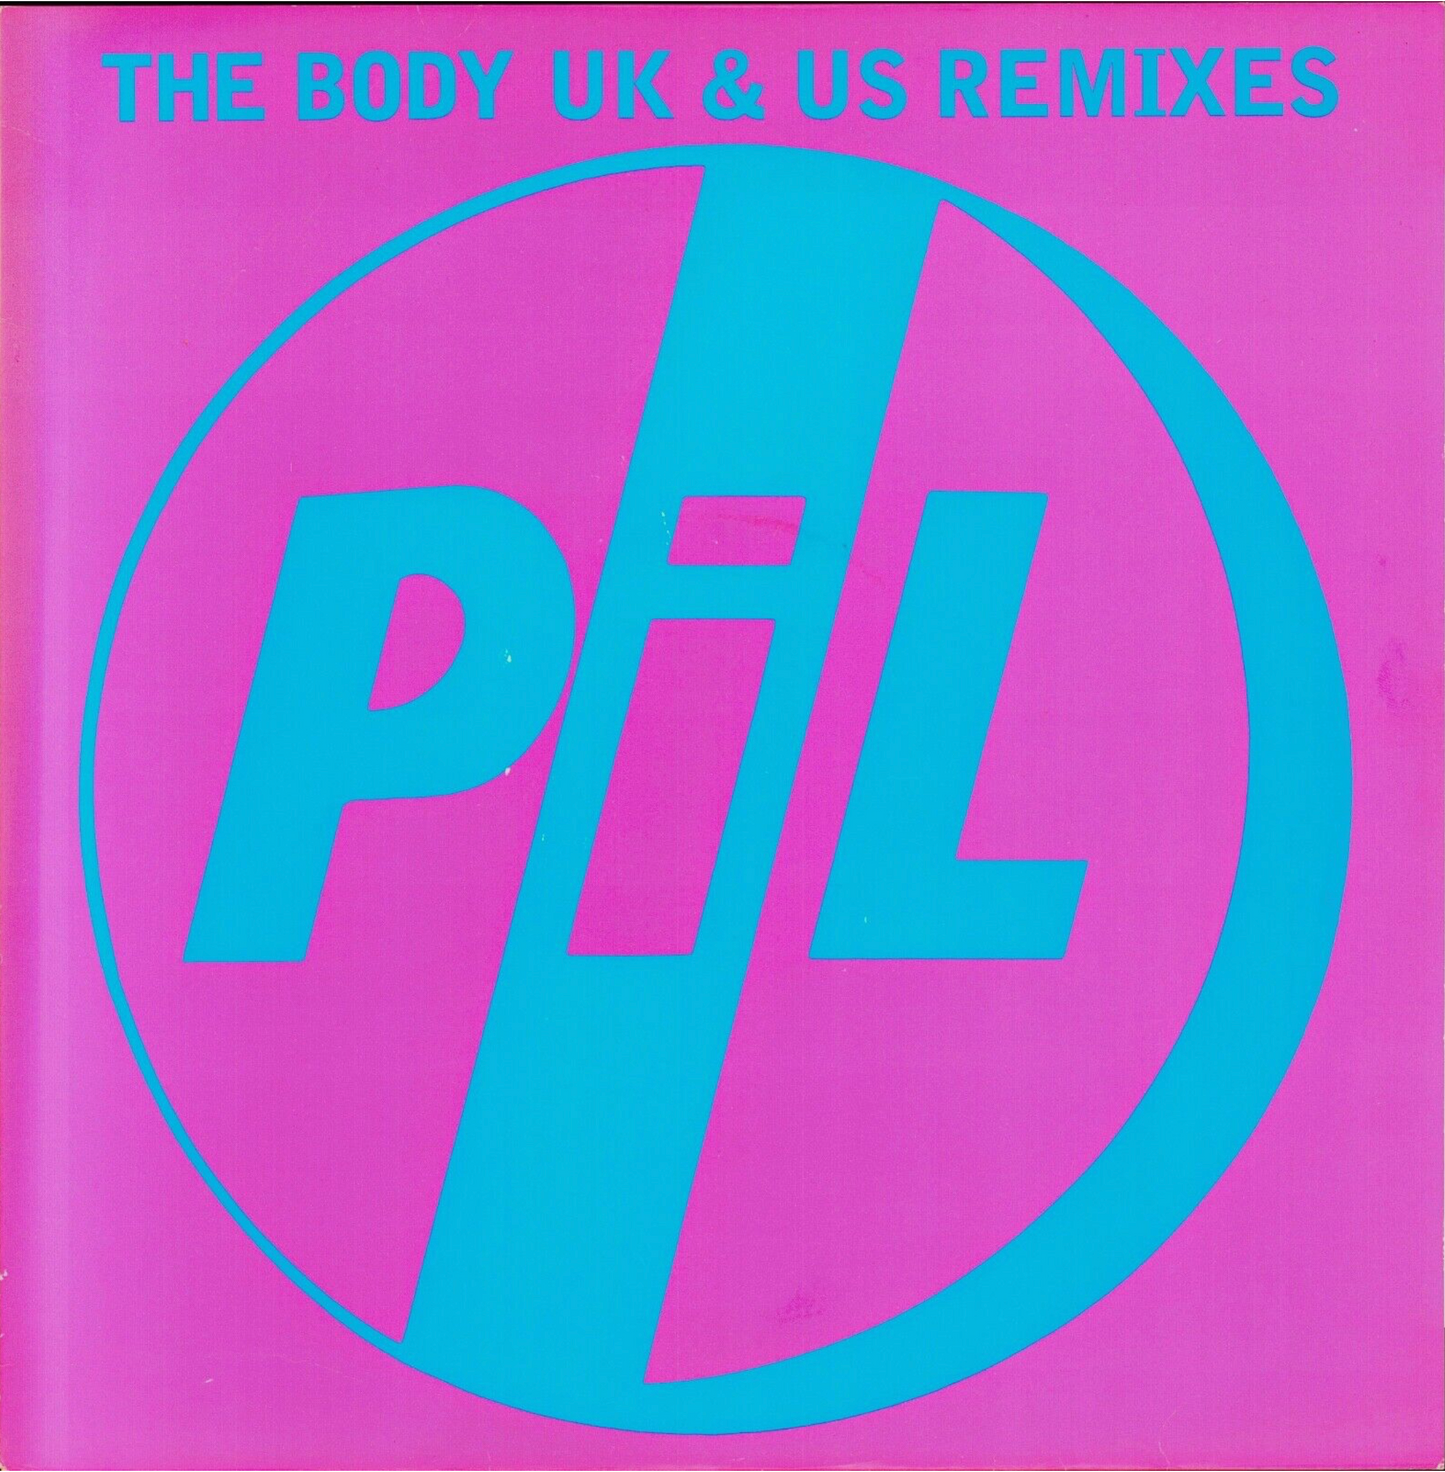 PiL - The Body UK & US Remixes Vinyl 12" Maxi-Single